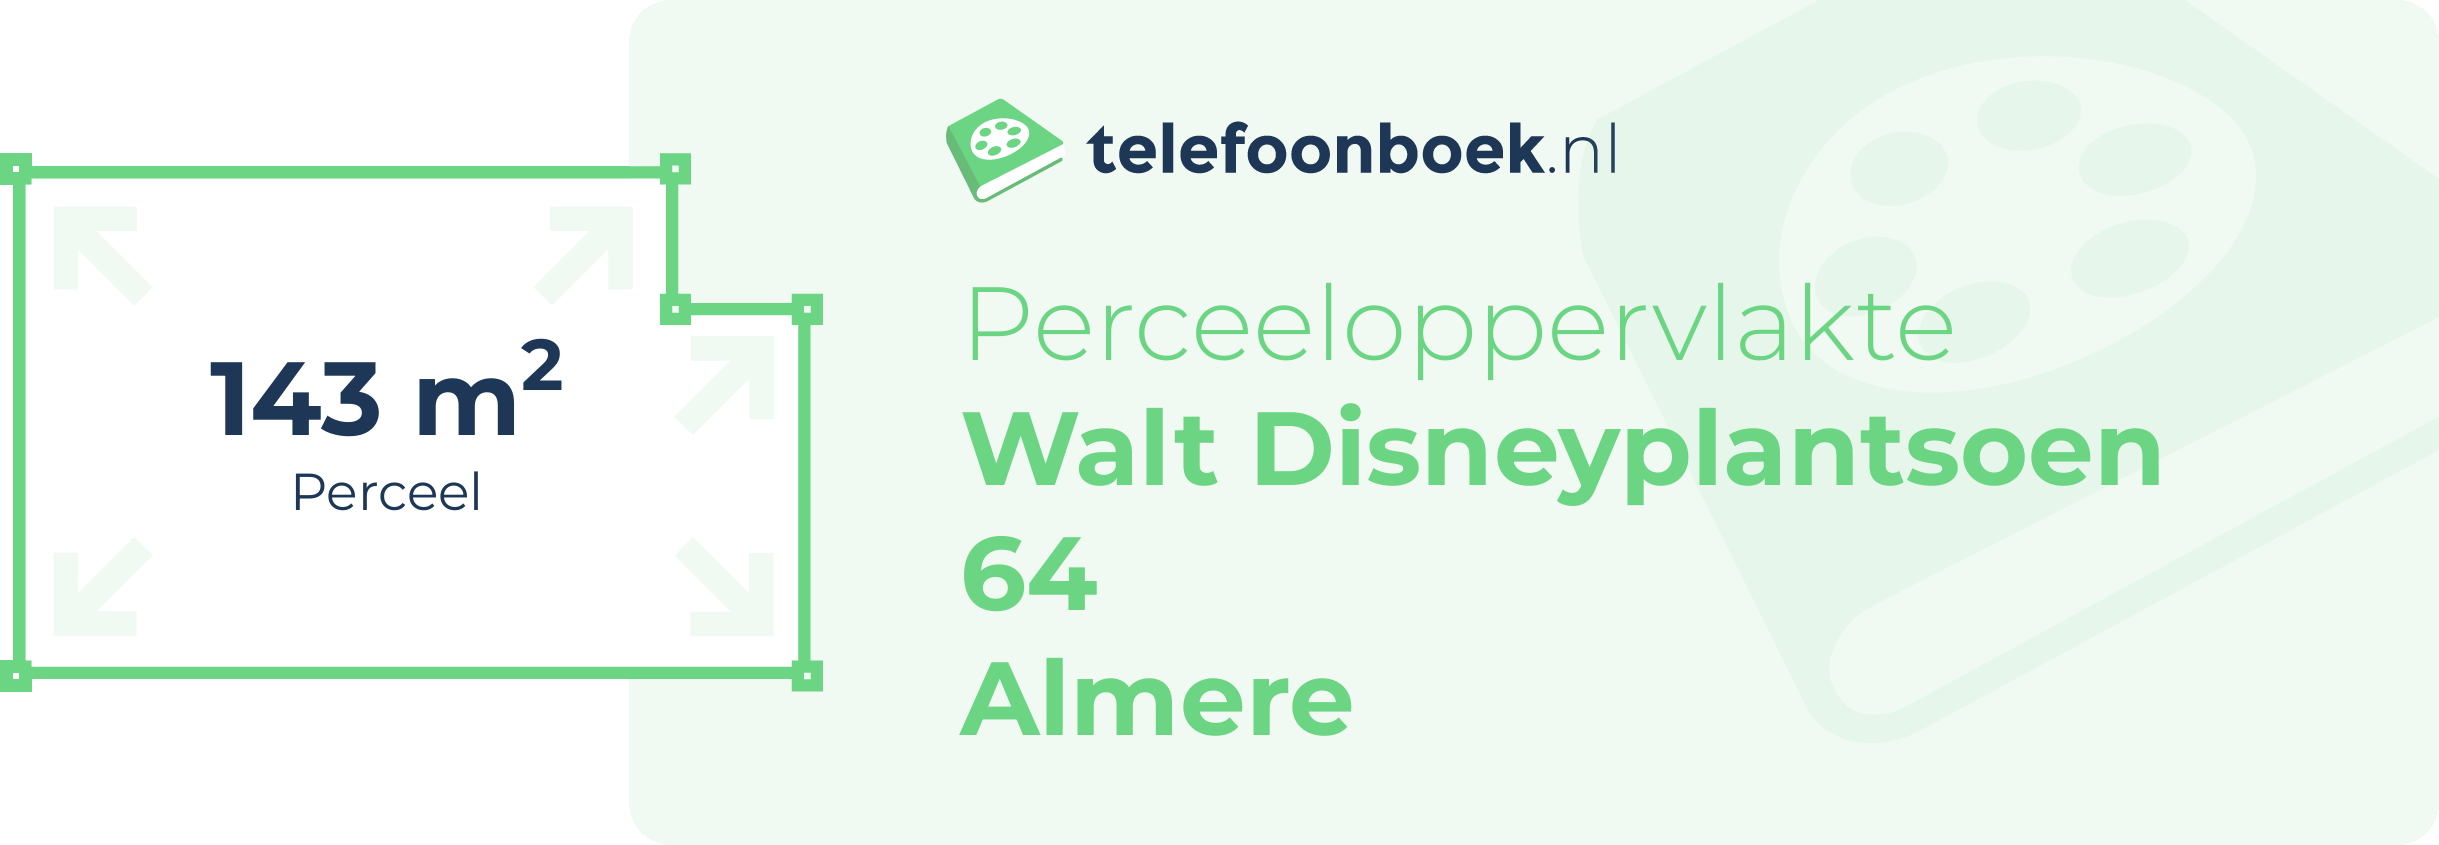 Perceeloppervlakte Walt Disneyplantsoen 64 Almere